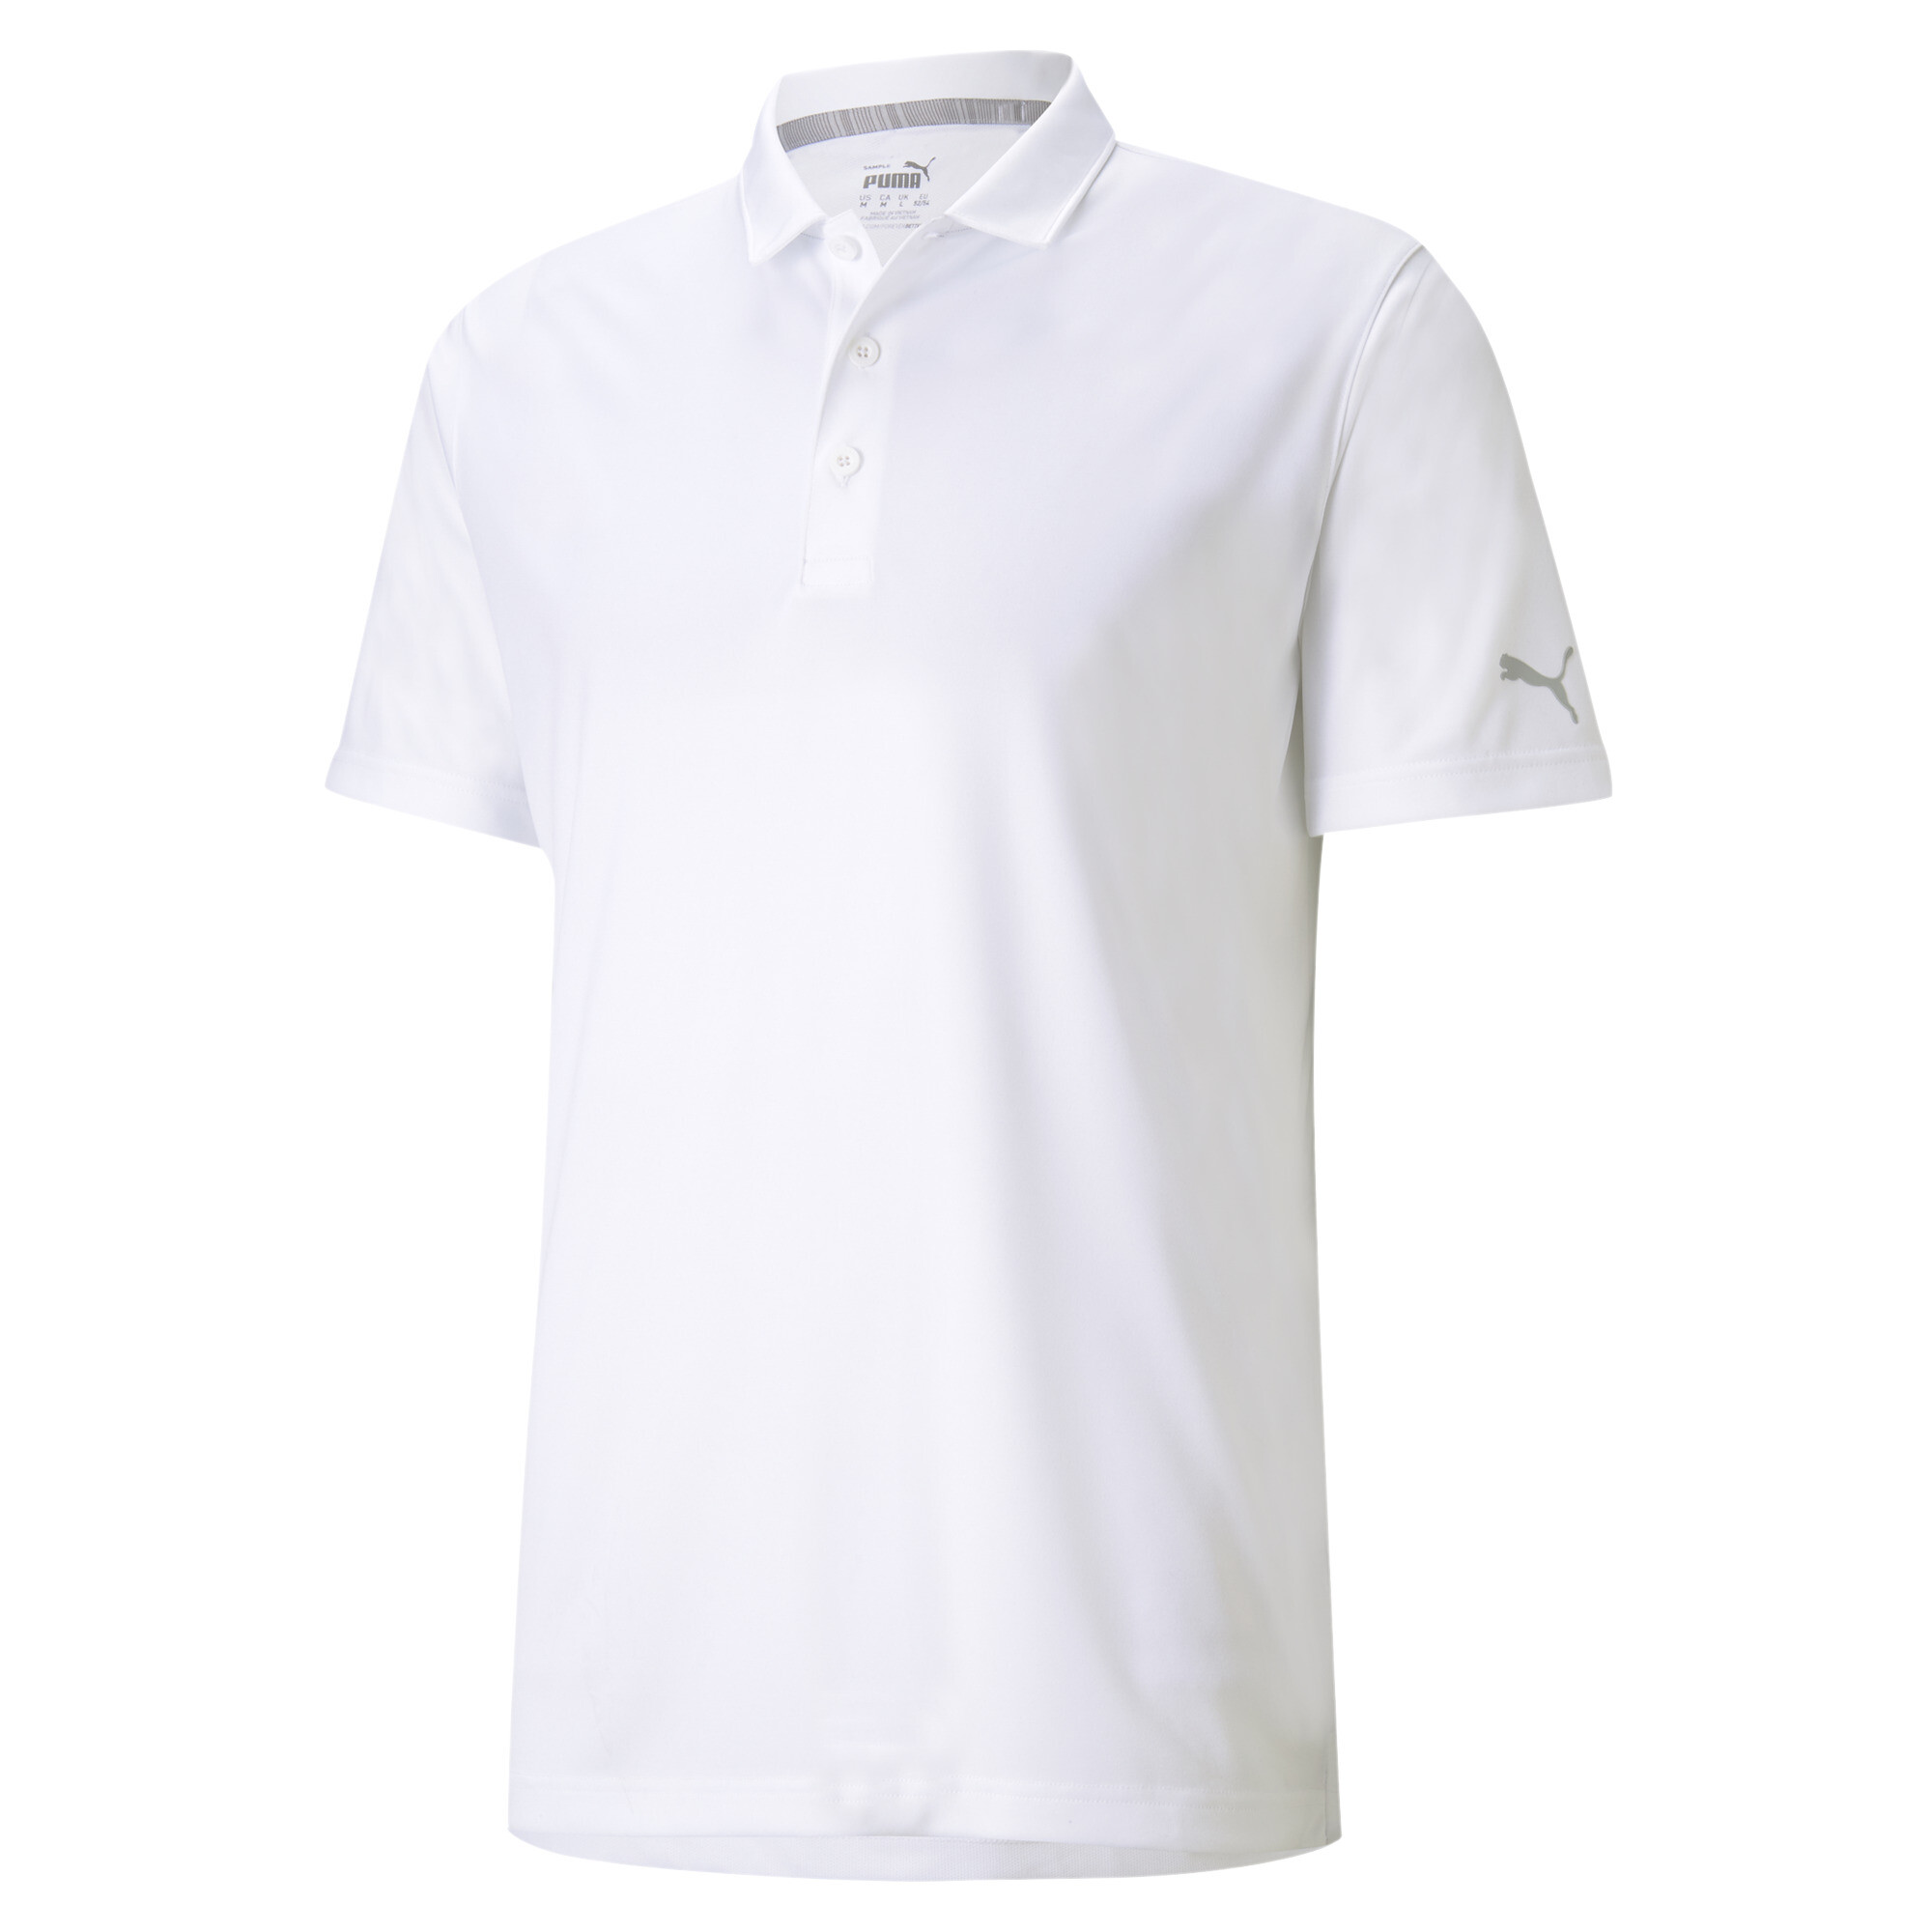 Men's Puma Gamer's Golf Polo Shirt T-Shirt, White T-Shirt, Size 6XL T-Shirt, Clothing